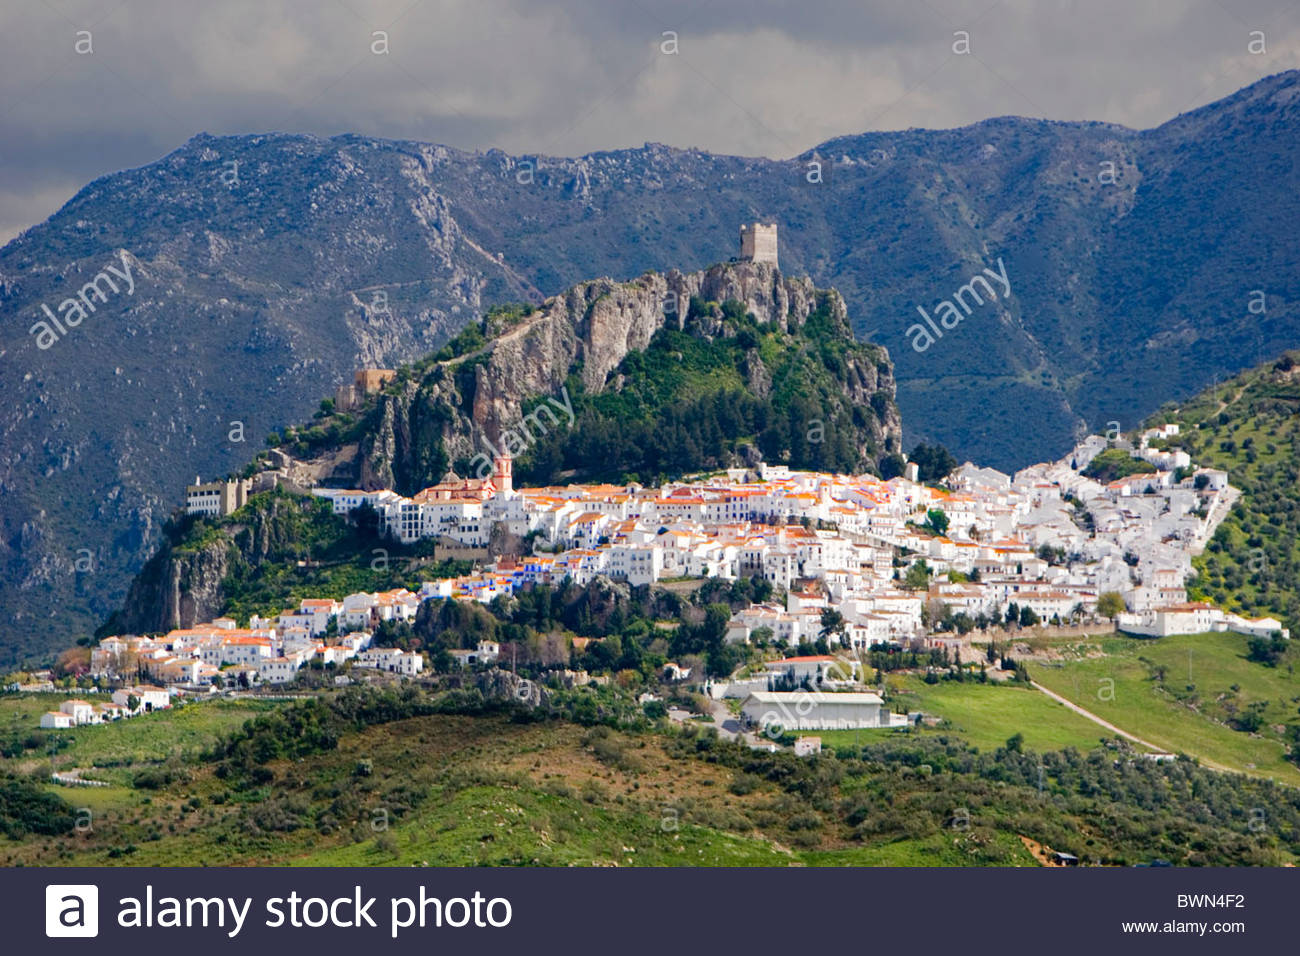 spain-europe-zahara-de-la-sierra-andalucia-region-cadiz-province-city-BWN4F2.jpg